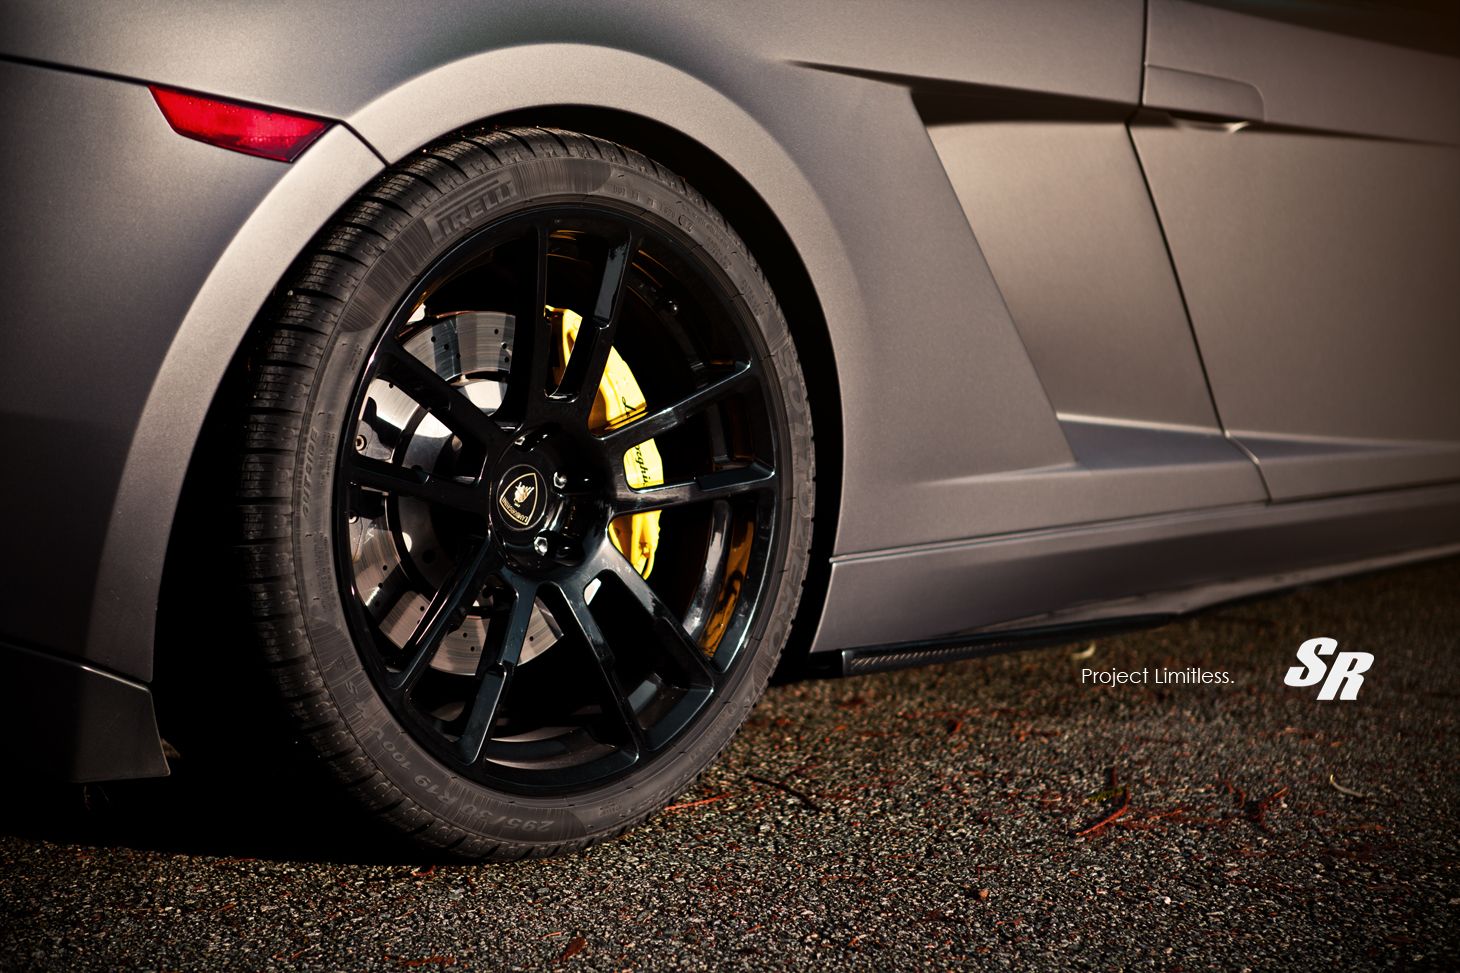 2013 Lamborghini Gallardo Project Limitless by SR Auto Group